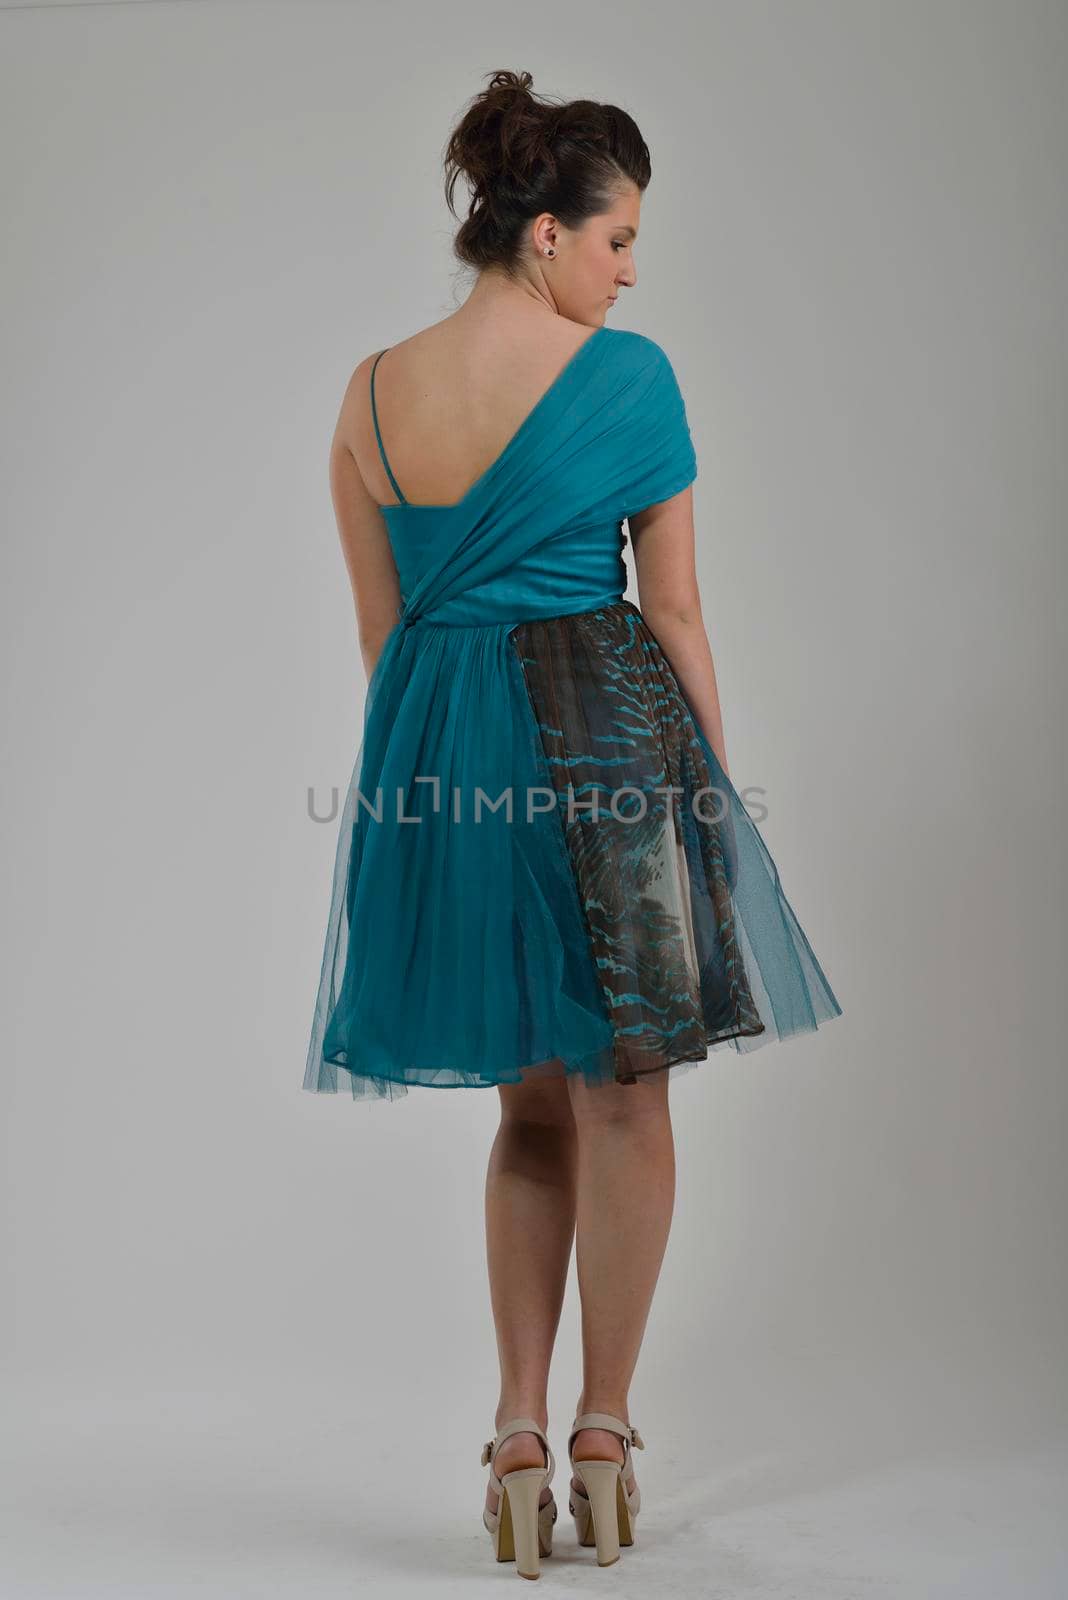 elegant woman in  fashionable  stylish dress posing in the studio